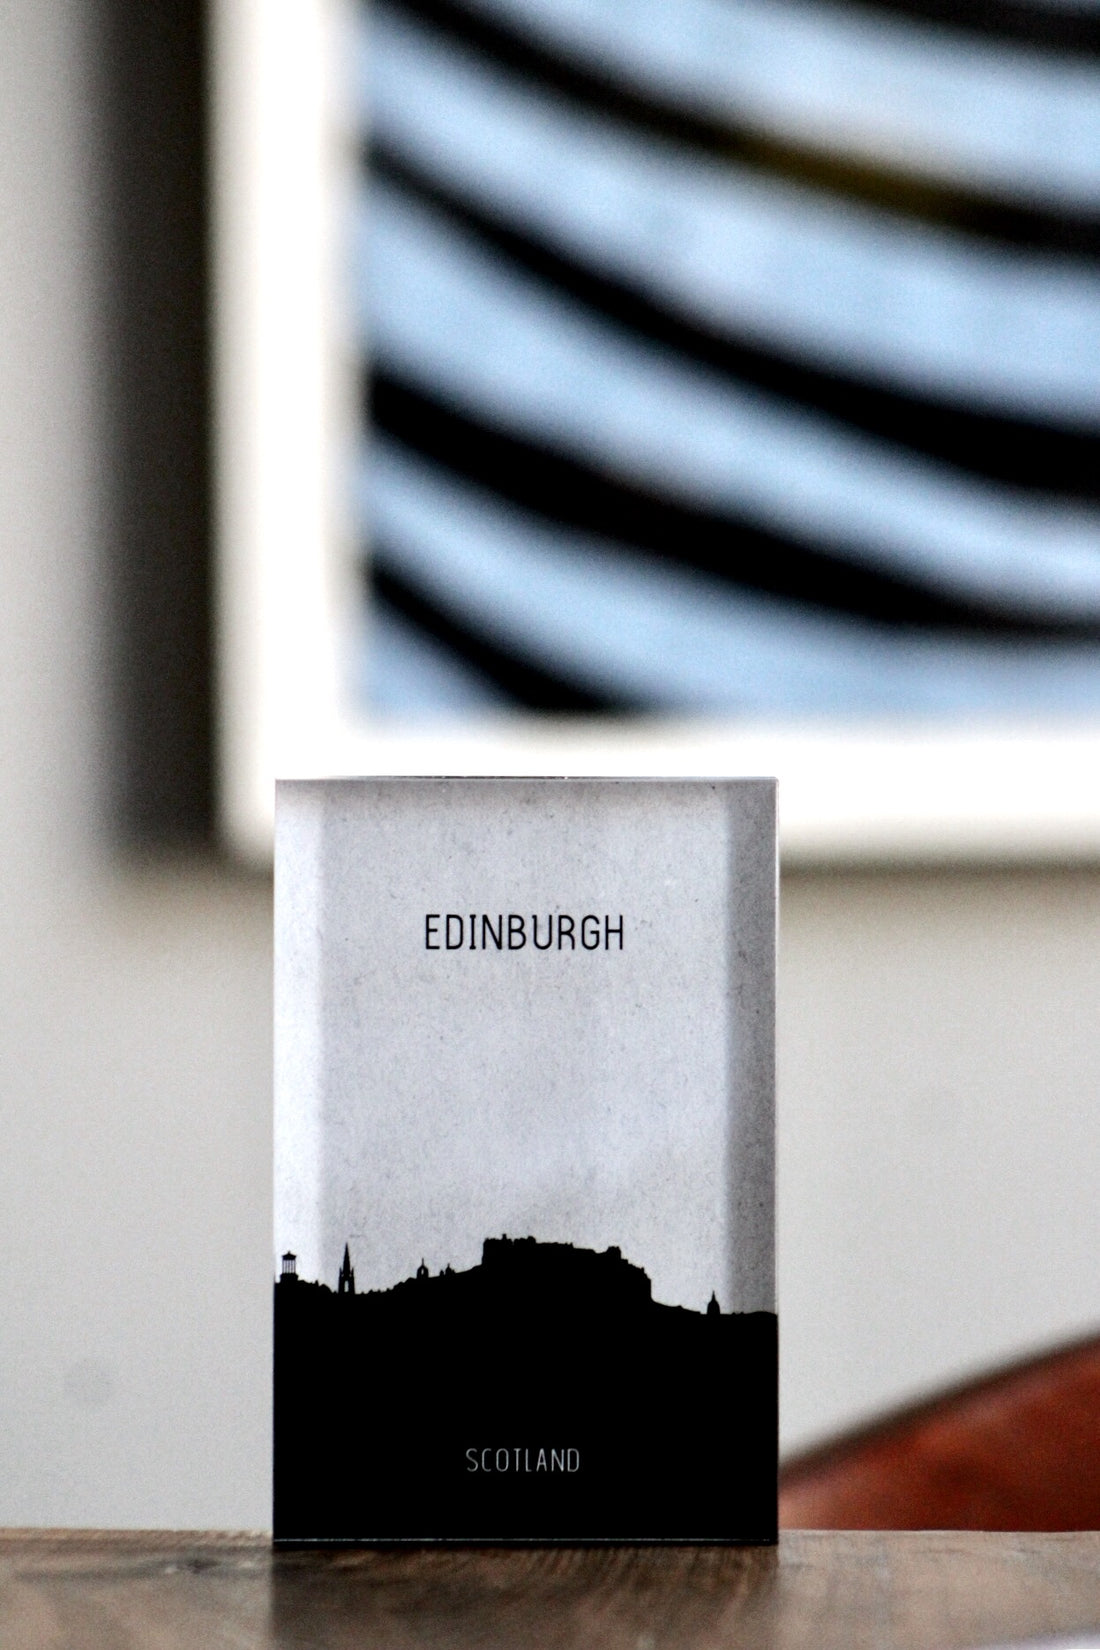 Edinburgh design object